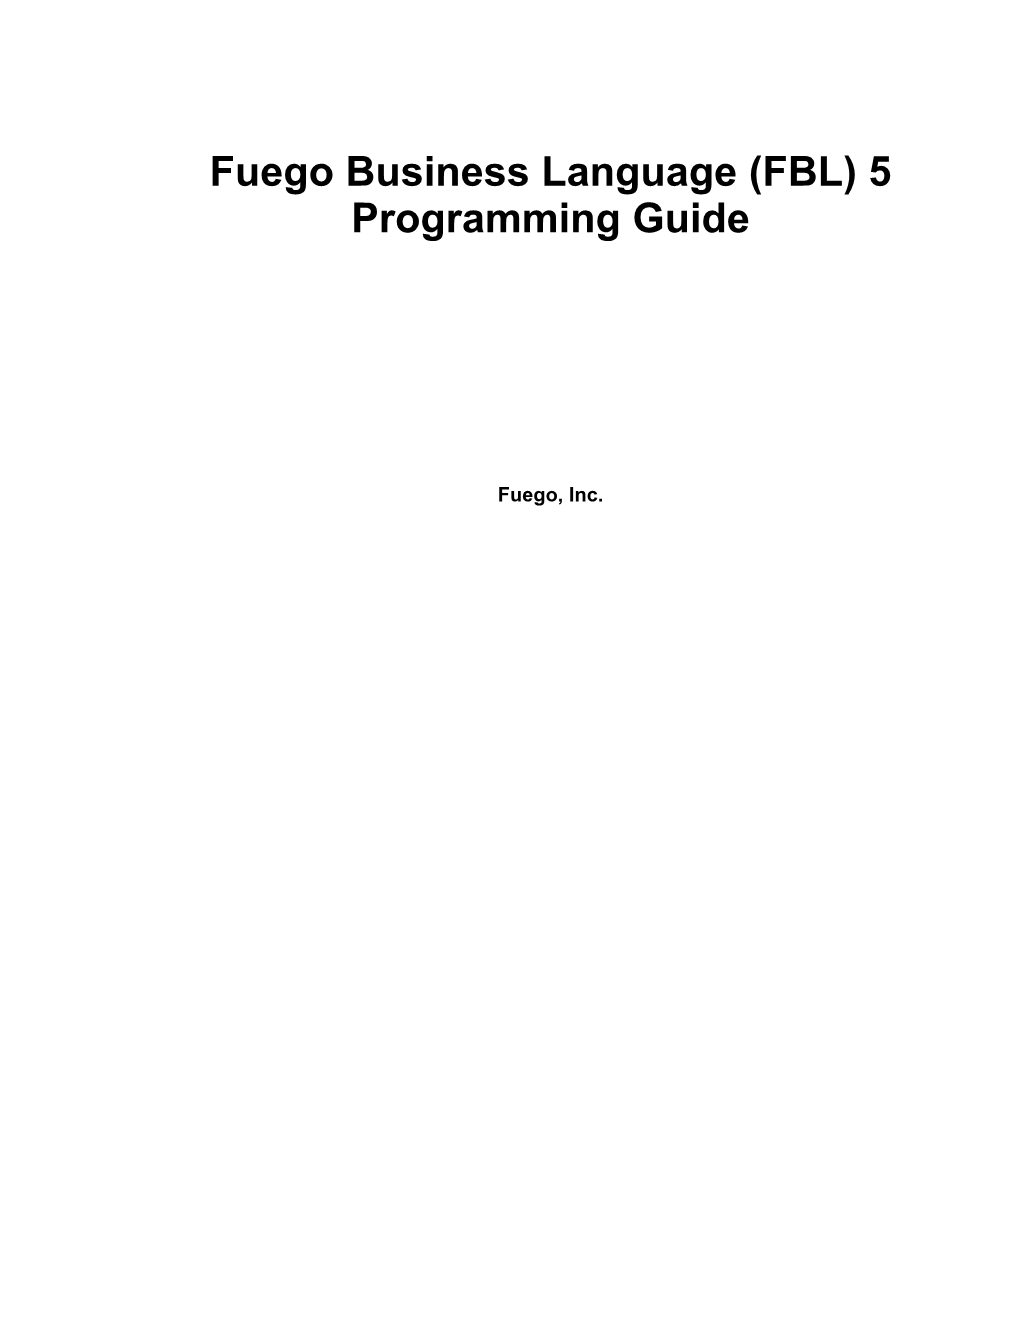 Fuego Business Language (FBL) 5 Programming Guide